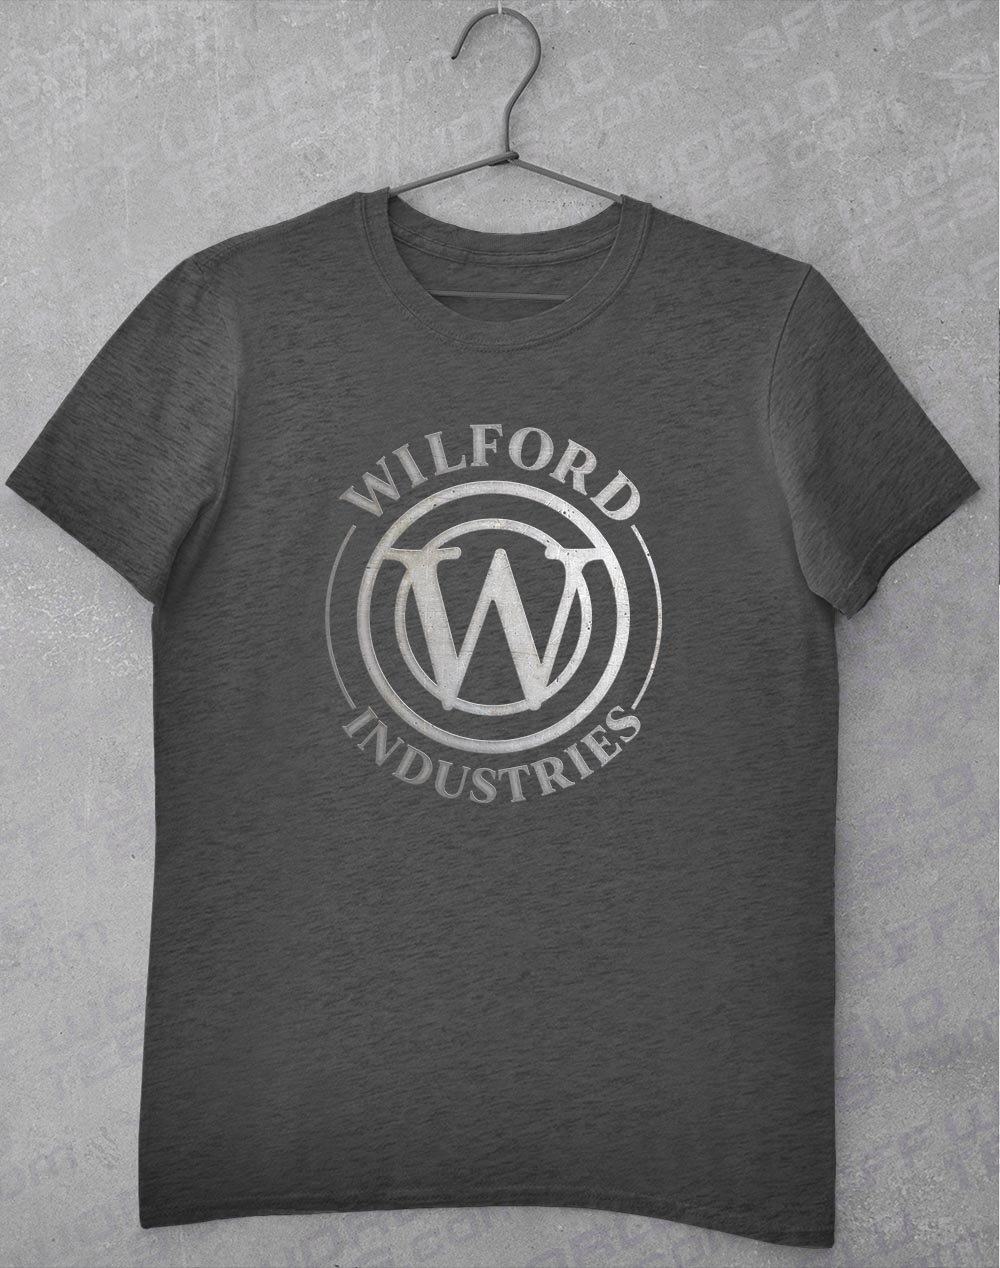 Wilford Industries T-Shirt S / Dark Heather  - Off World Tees